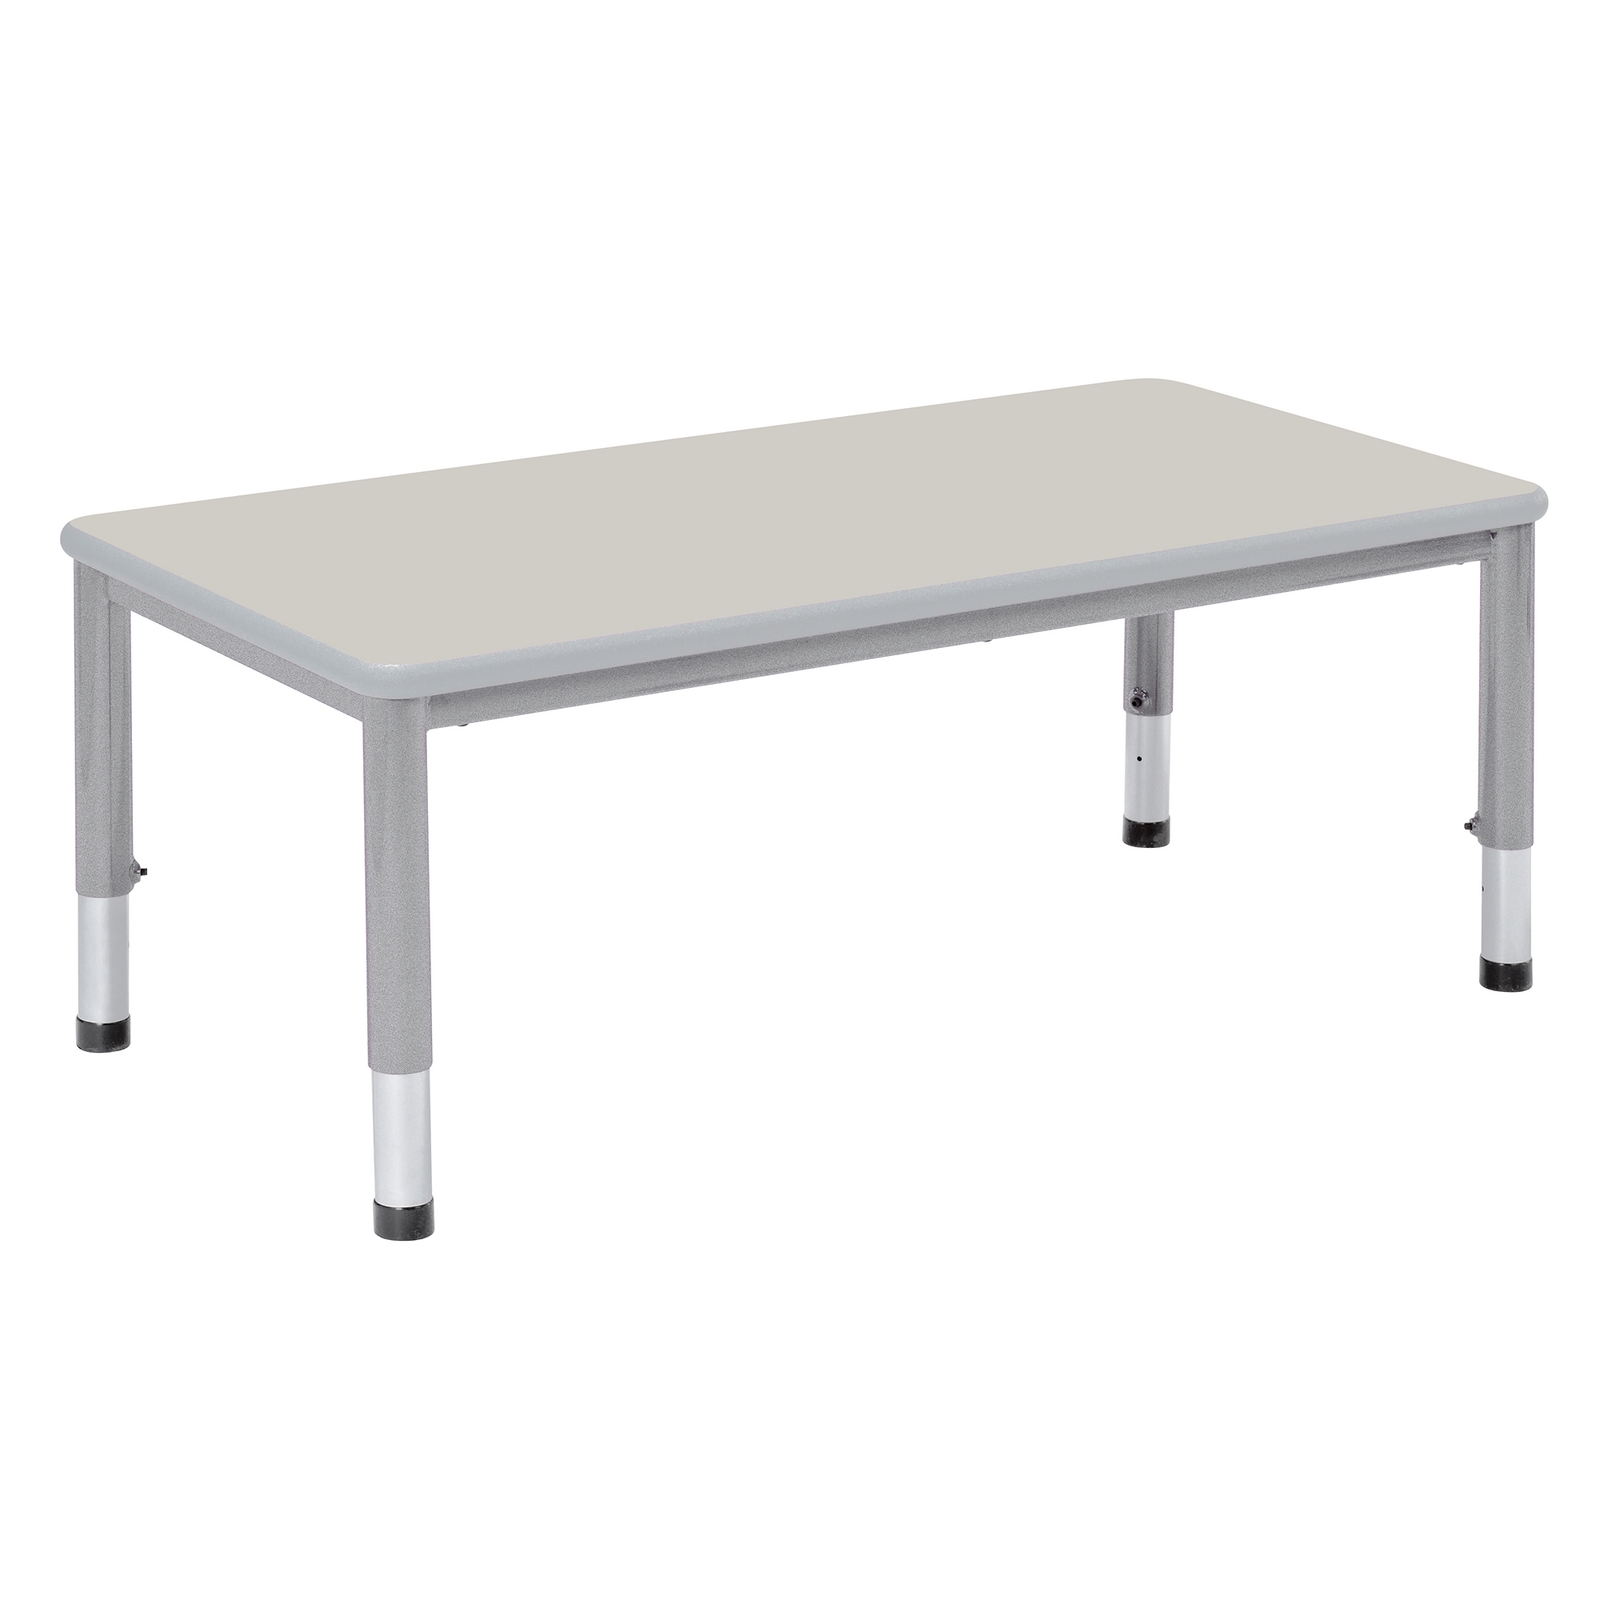 Harlequin Grey Large Rectangular Table - 120 x 60cm - Each